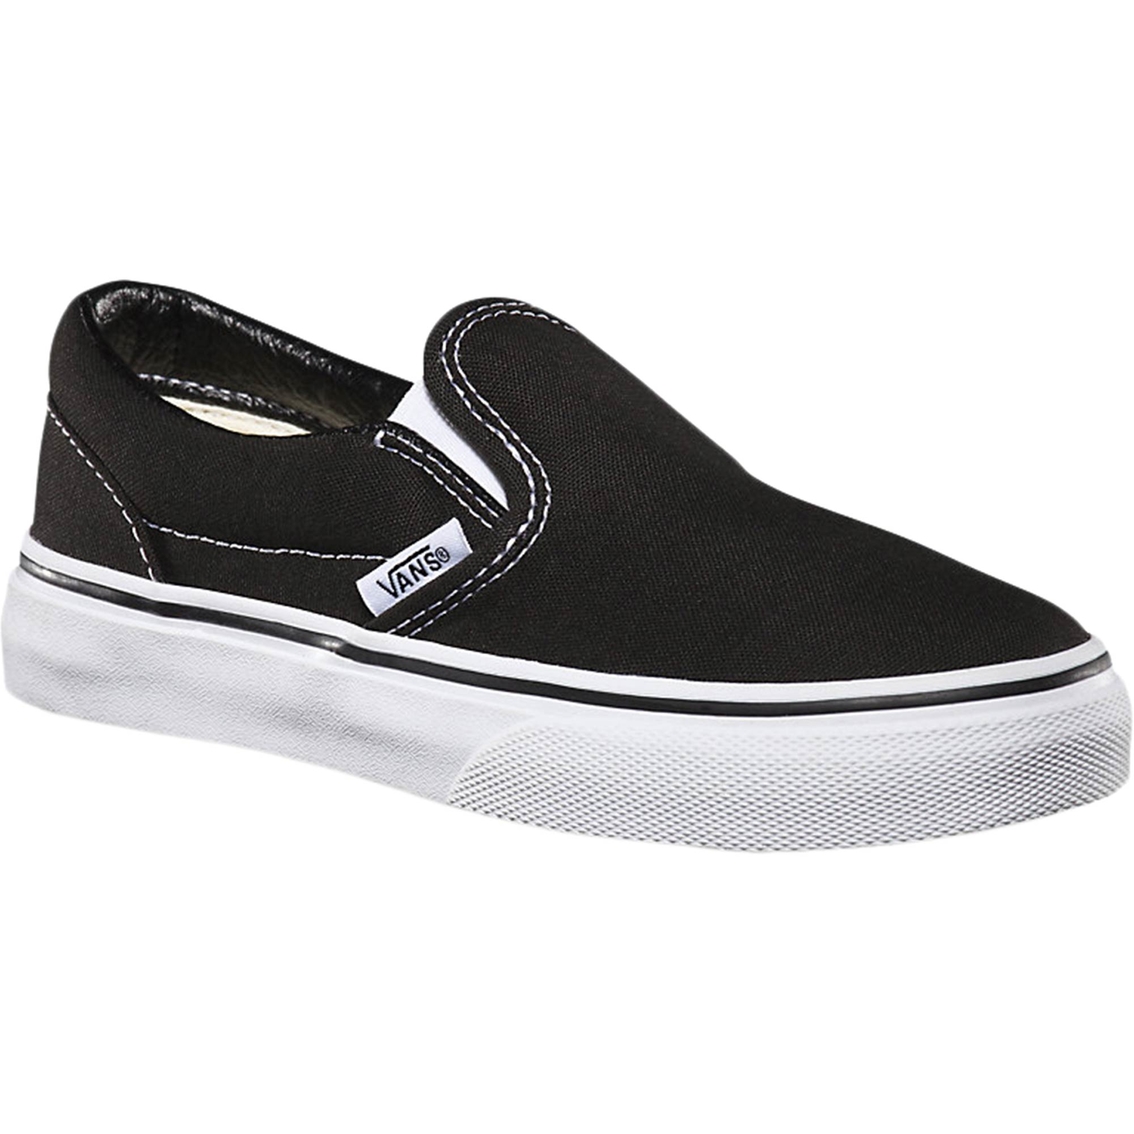 Vans Boys Classic Slip On Sneakers